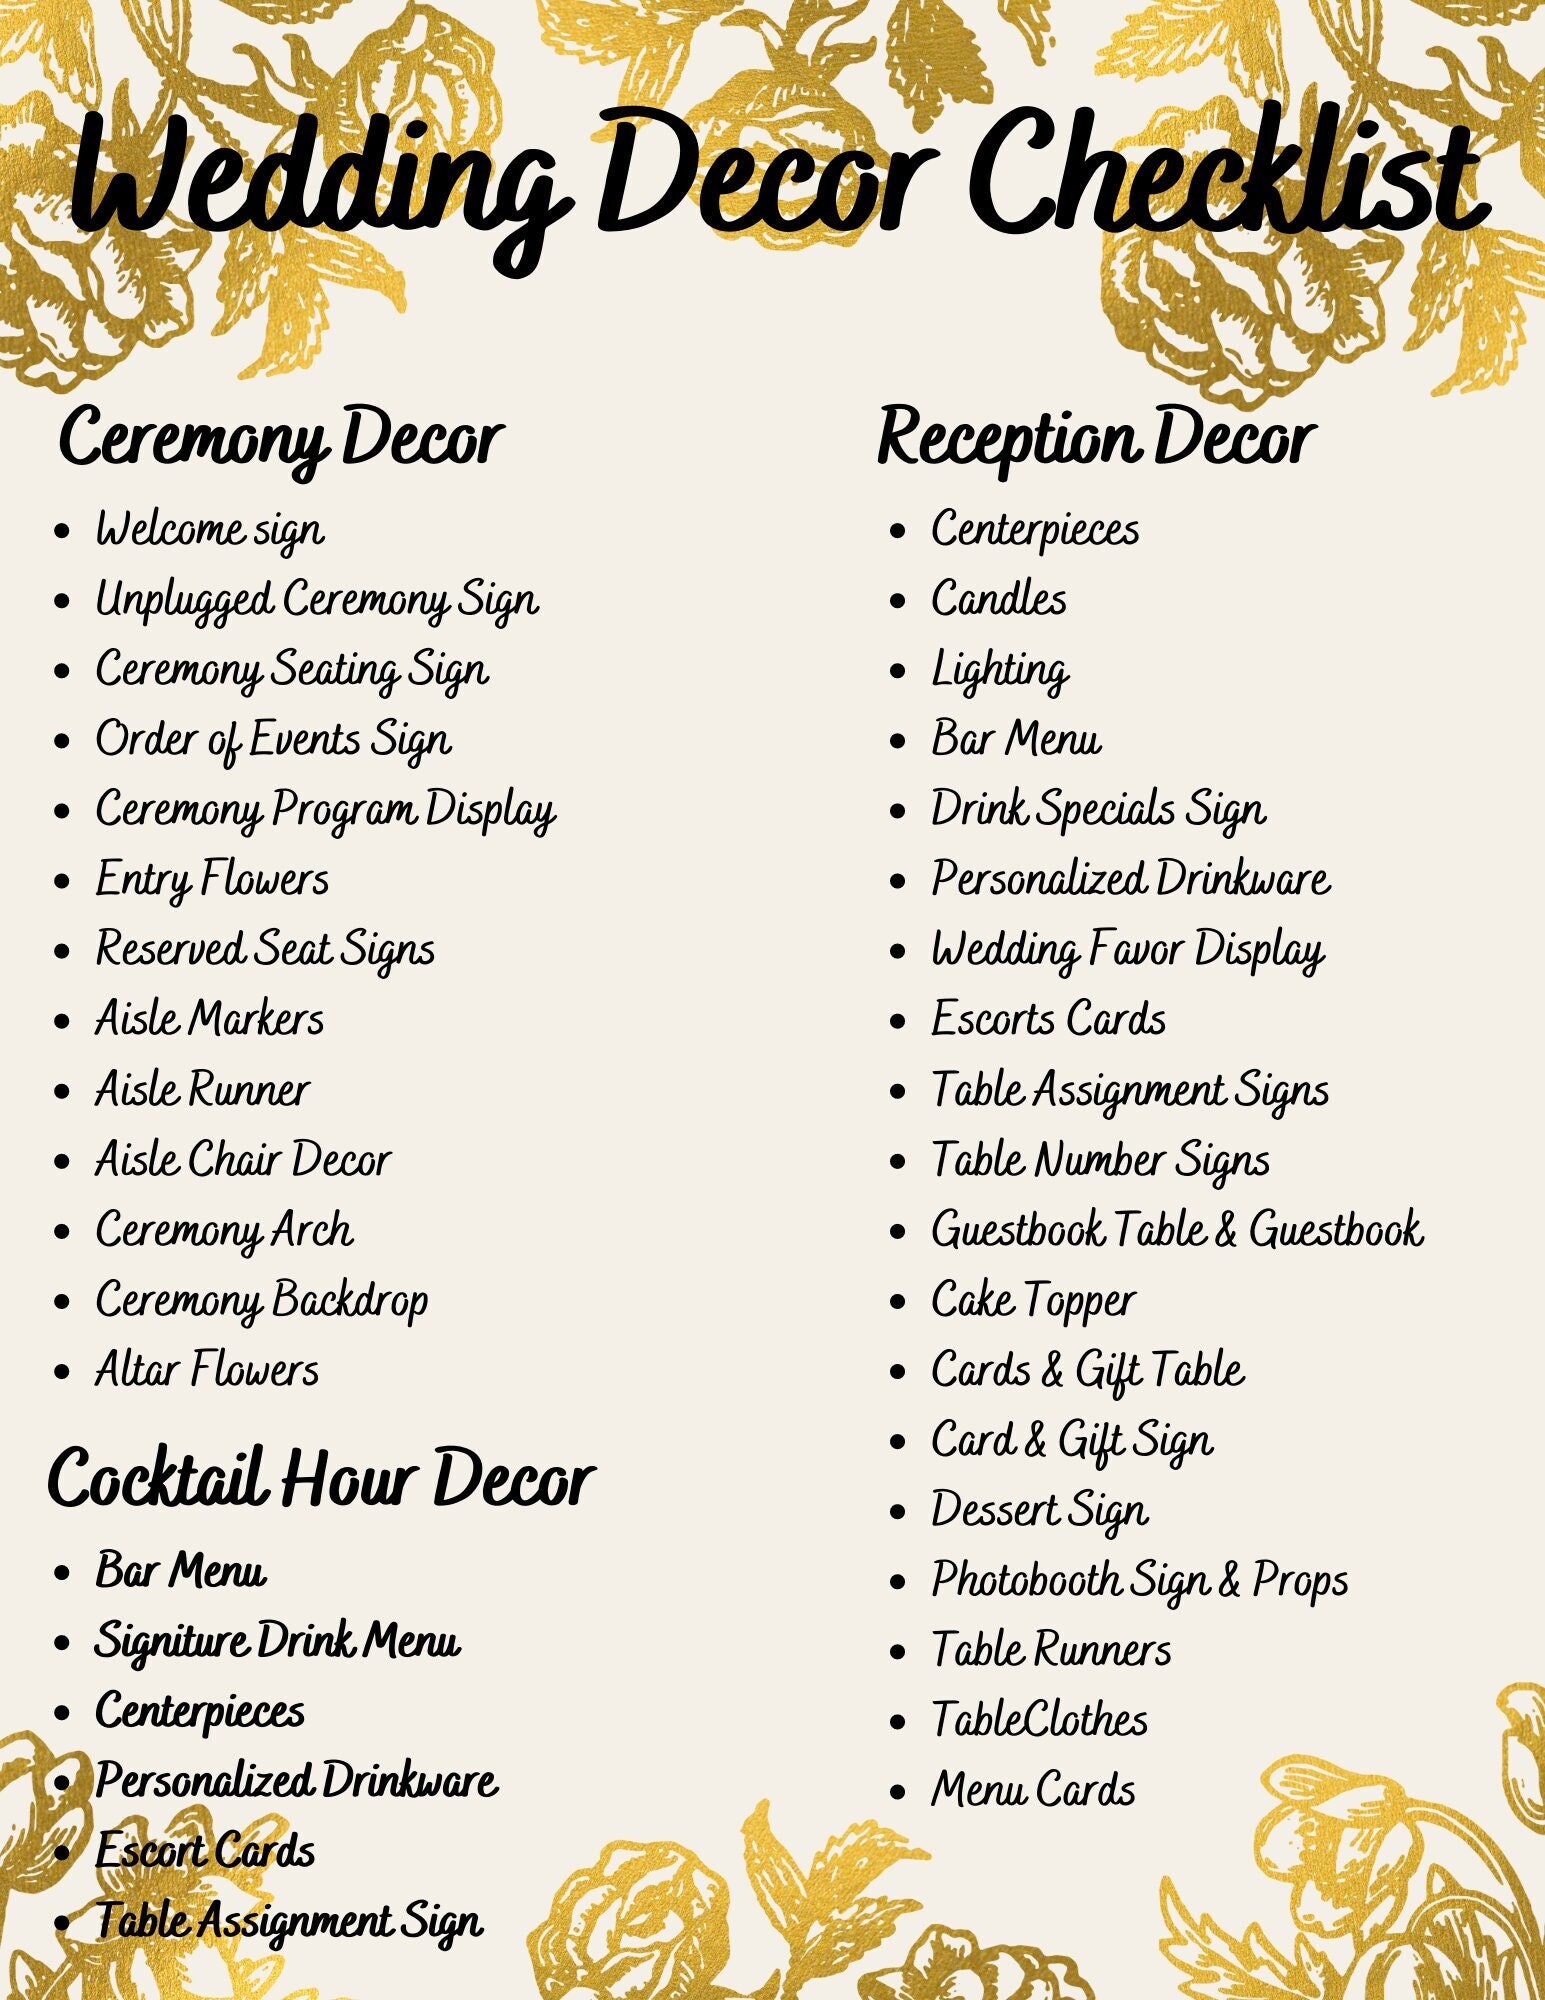 Must Have Details In Your Wedding Decor Checklist!!!